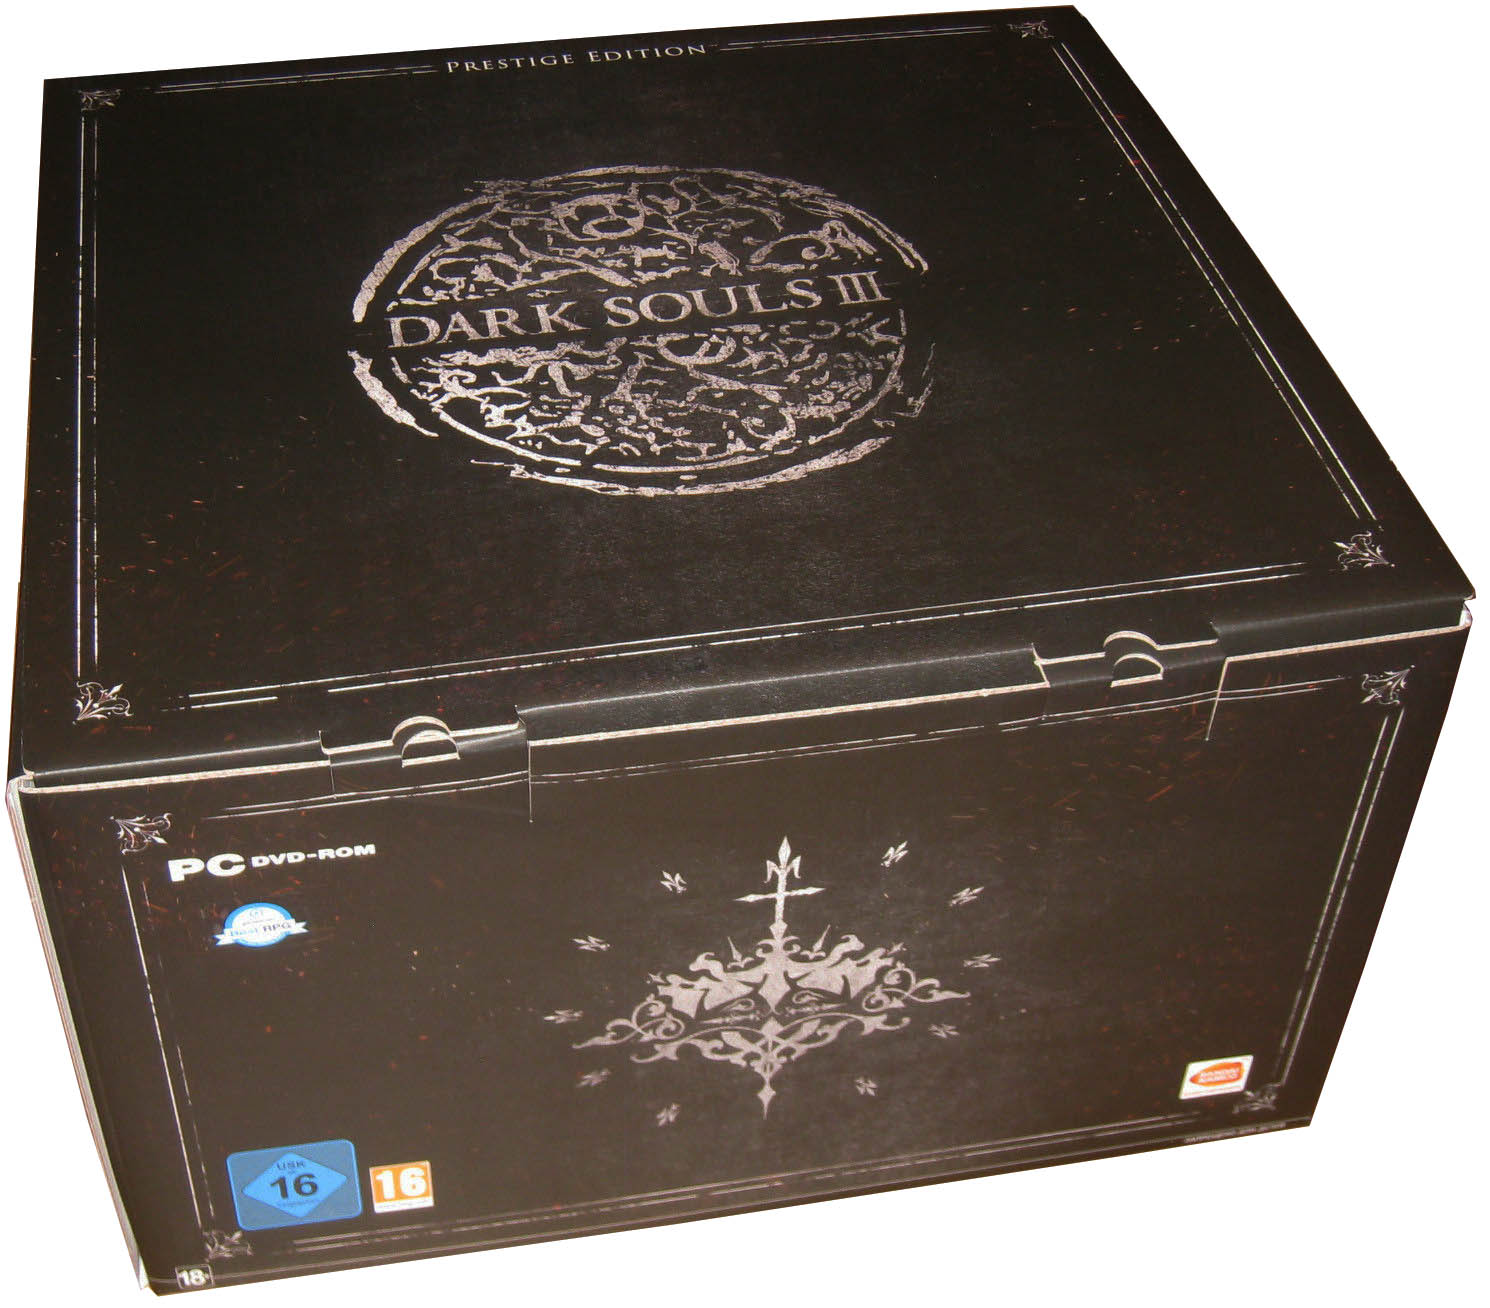 Dark Souls III (Prestige Edition) PC издание в Европе